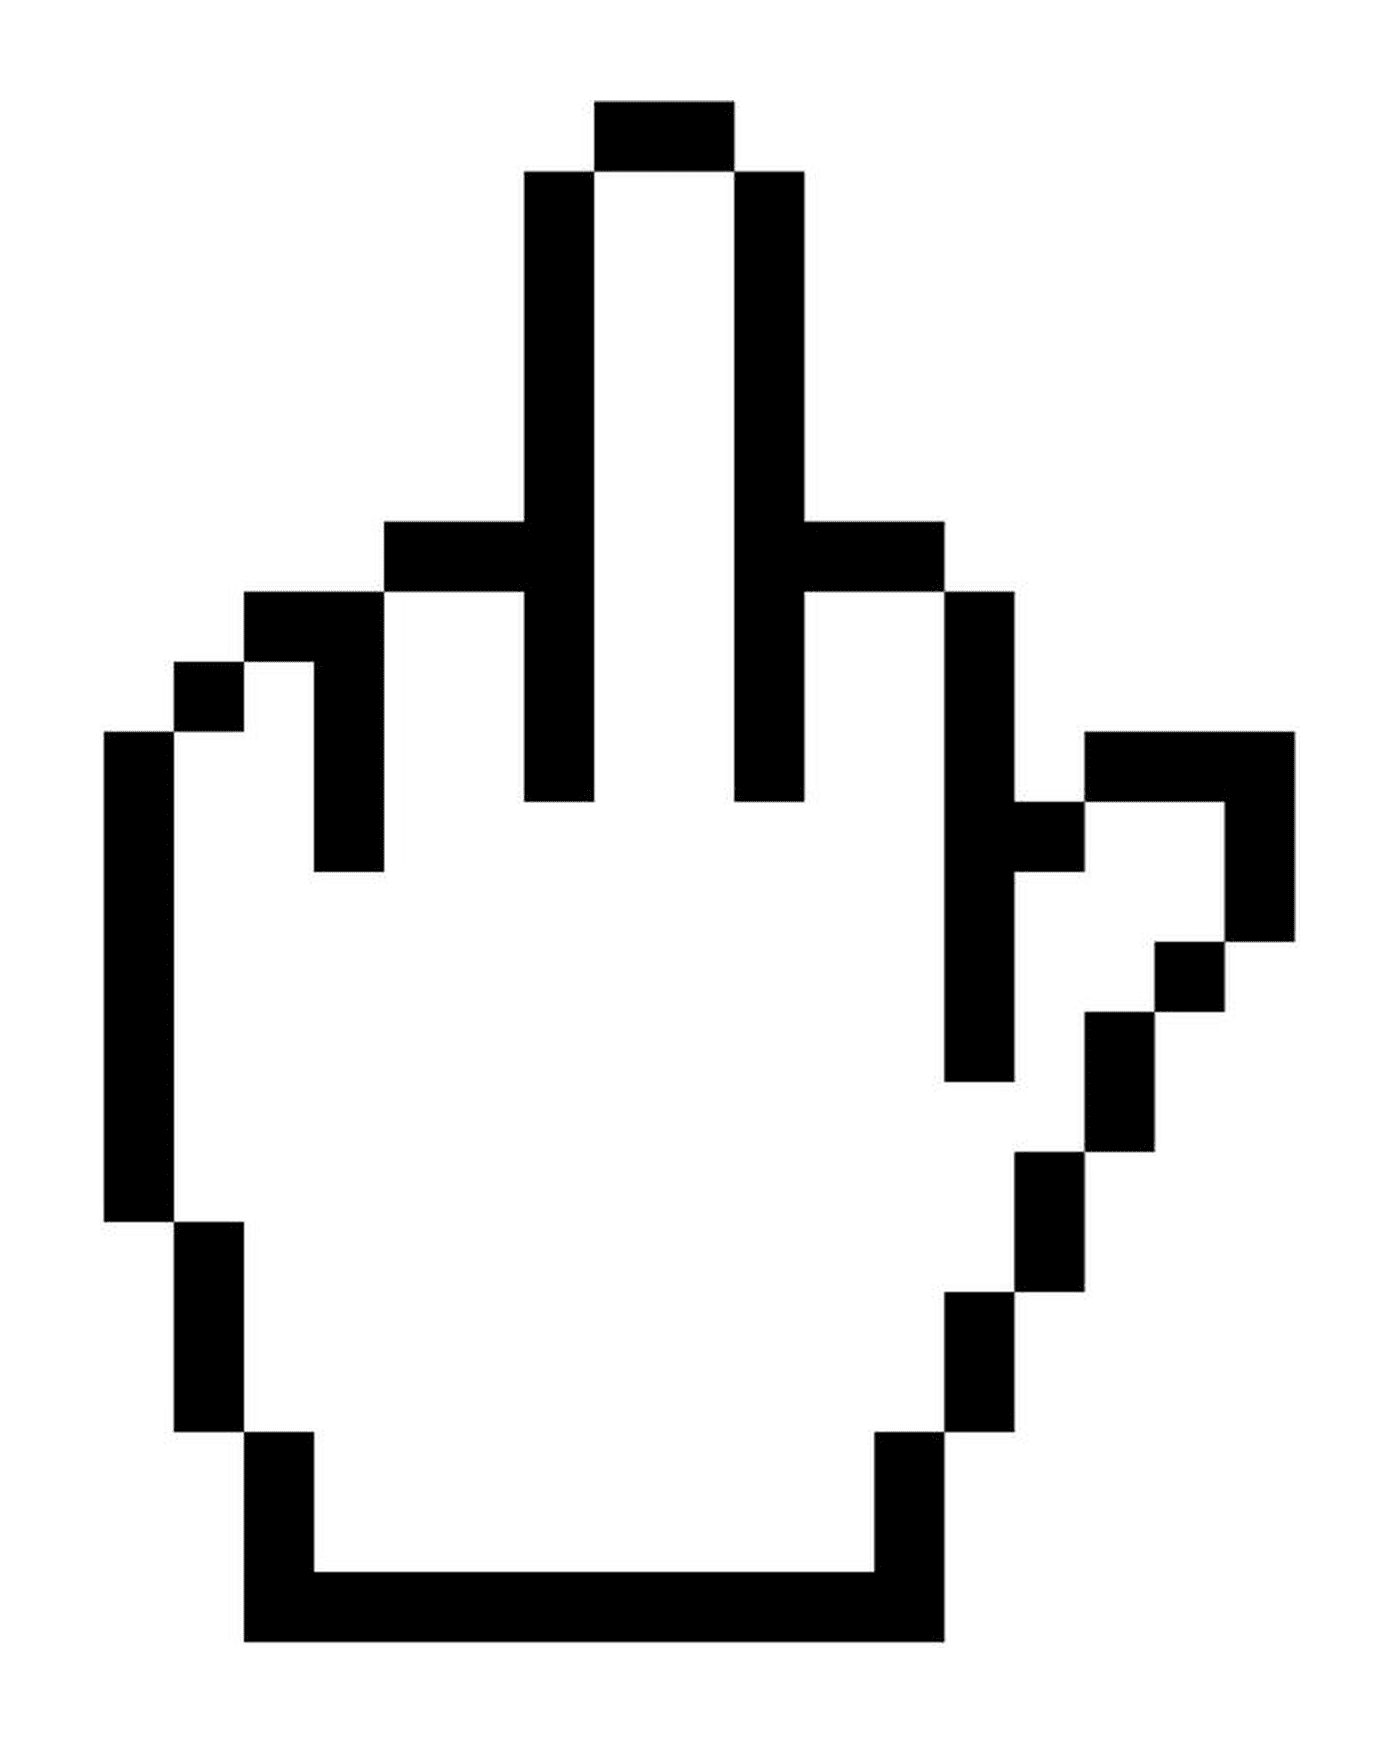  A hand cursor 